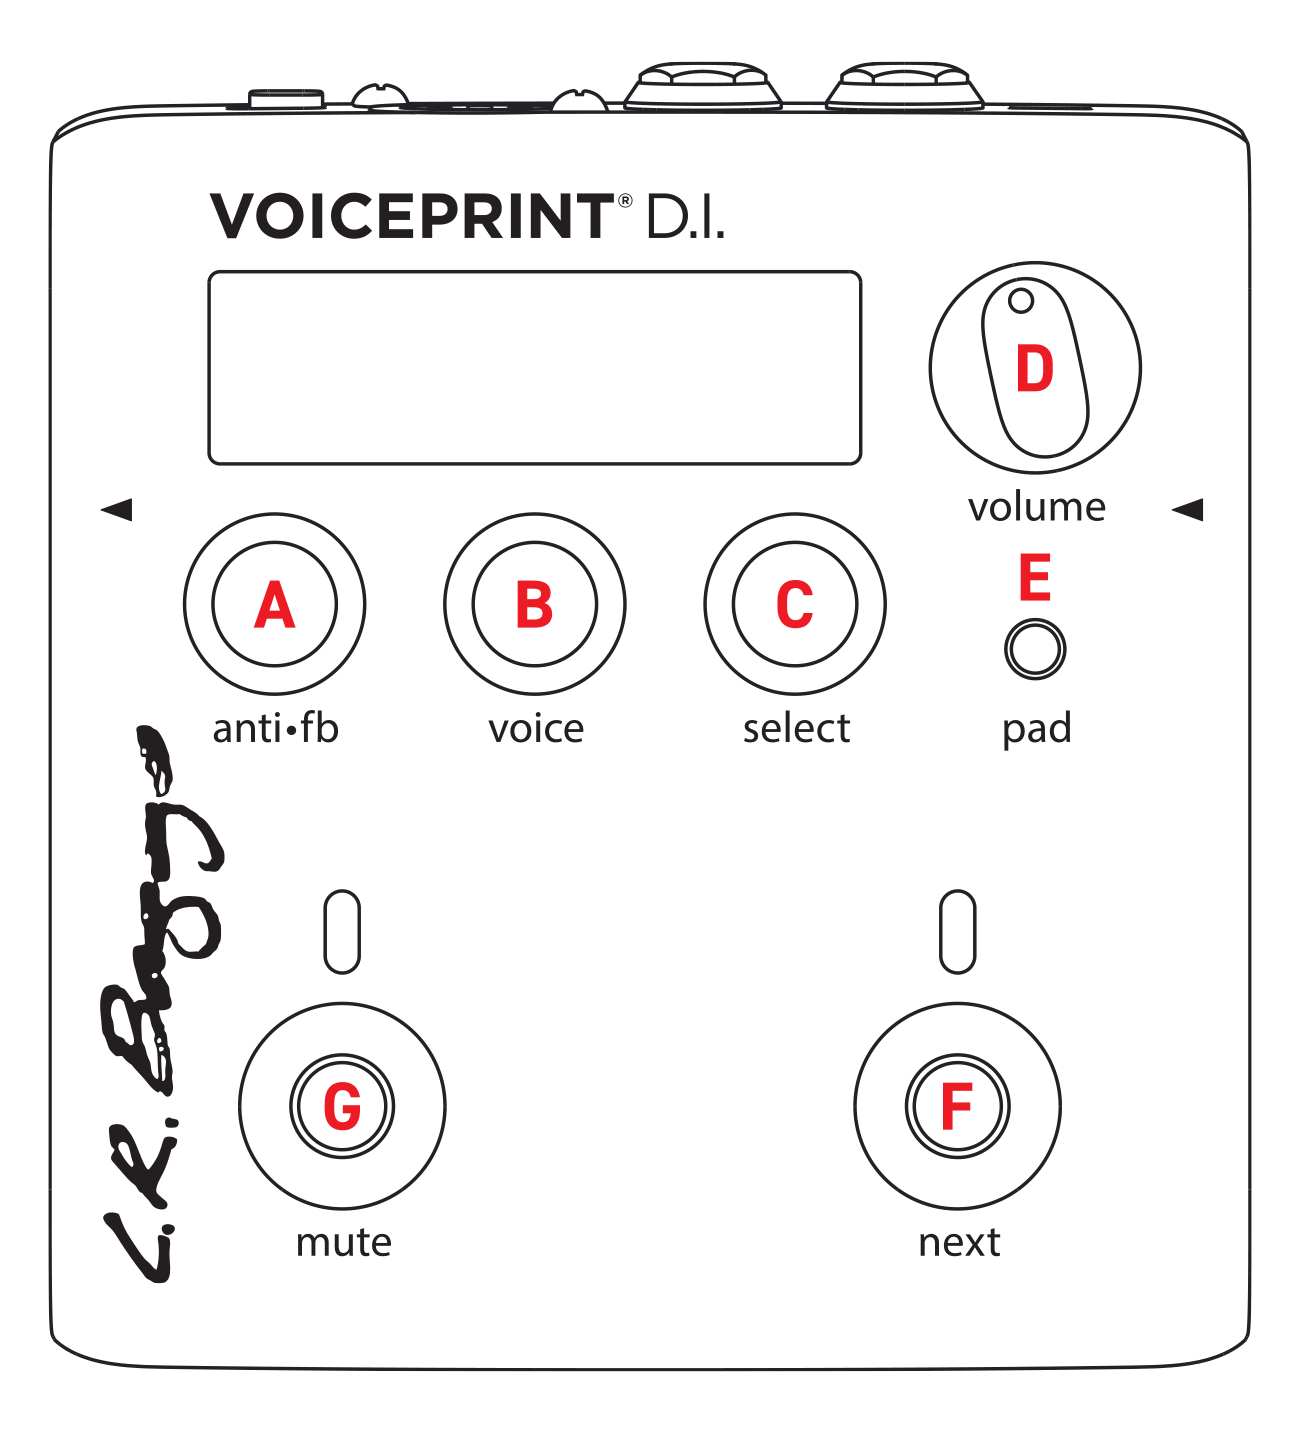 Voiceprint DI Top View